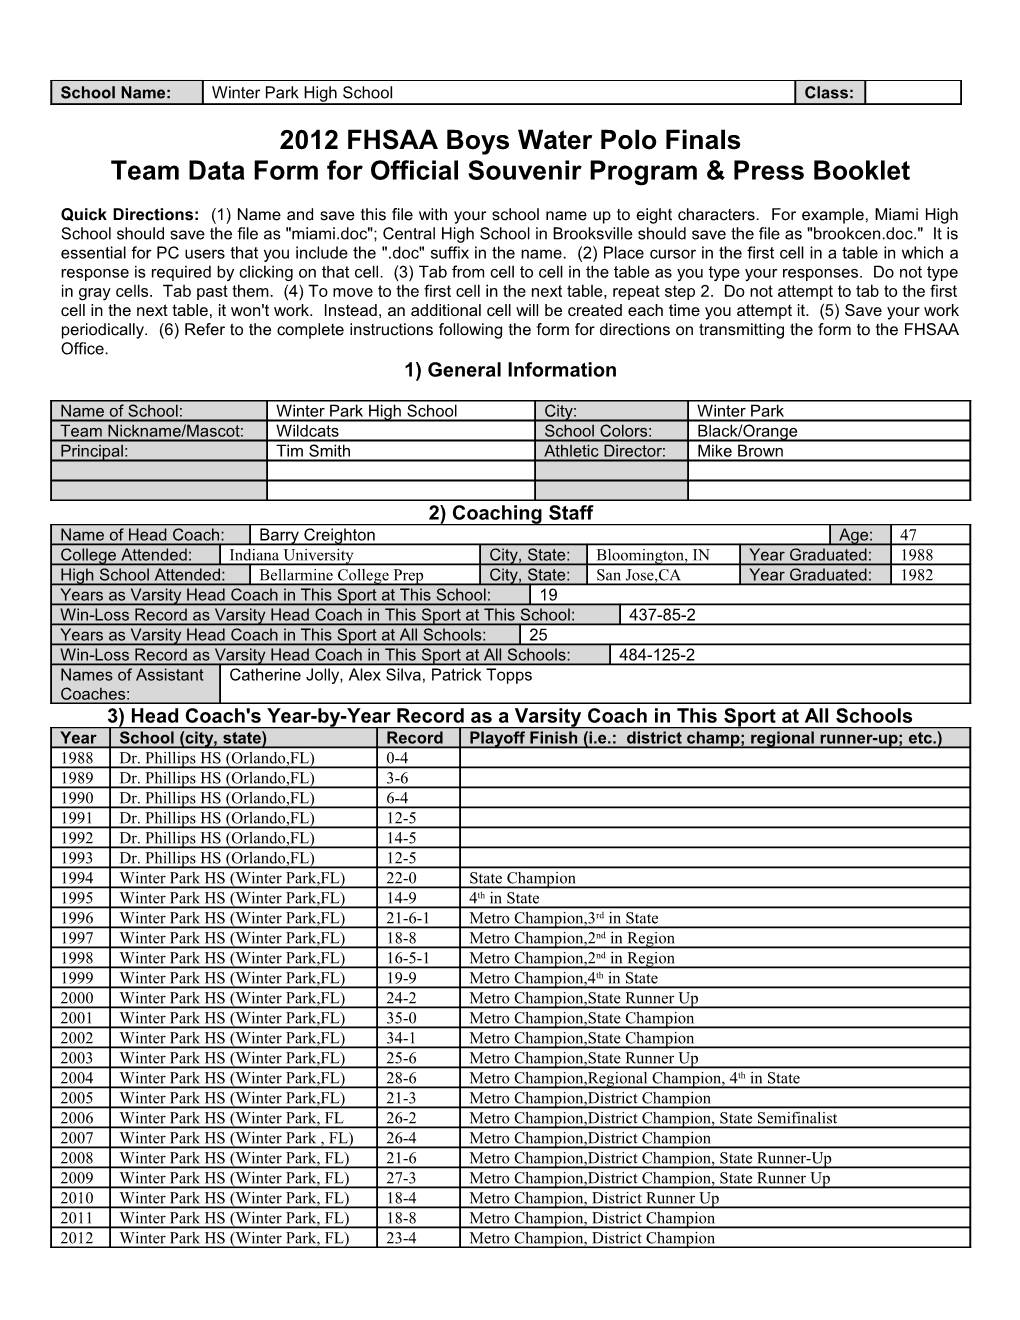 Team Data Form for Official Souvenir Program & Press Booklet s9